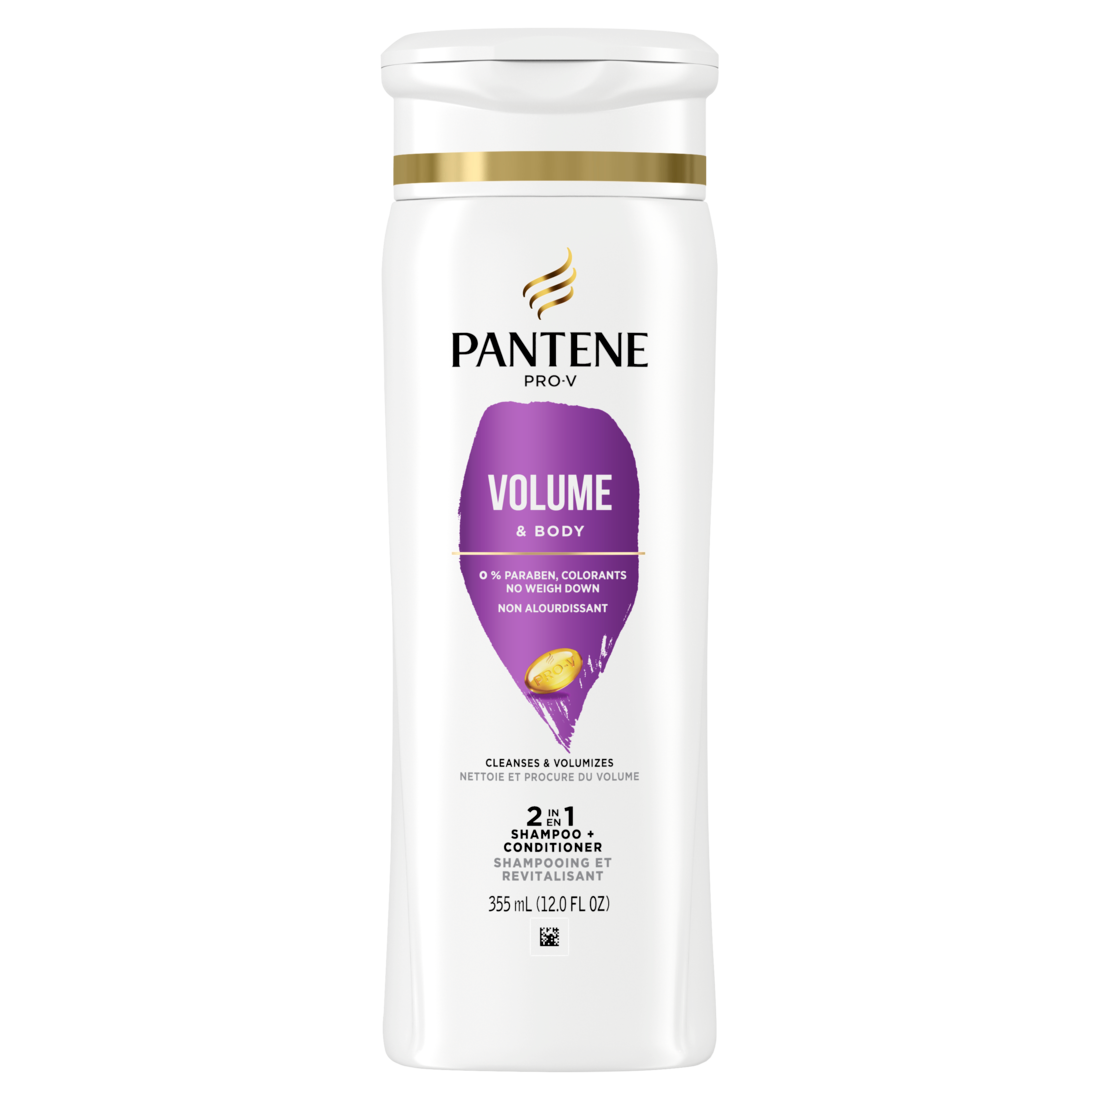 PANTENE PRO-V Volume & Body 2in1 Shampoo + Conditioner - 12.0oz/6pk